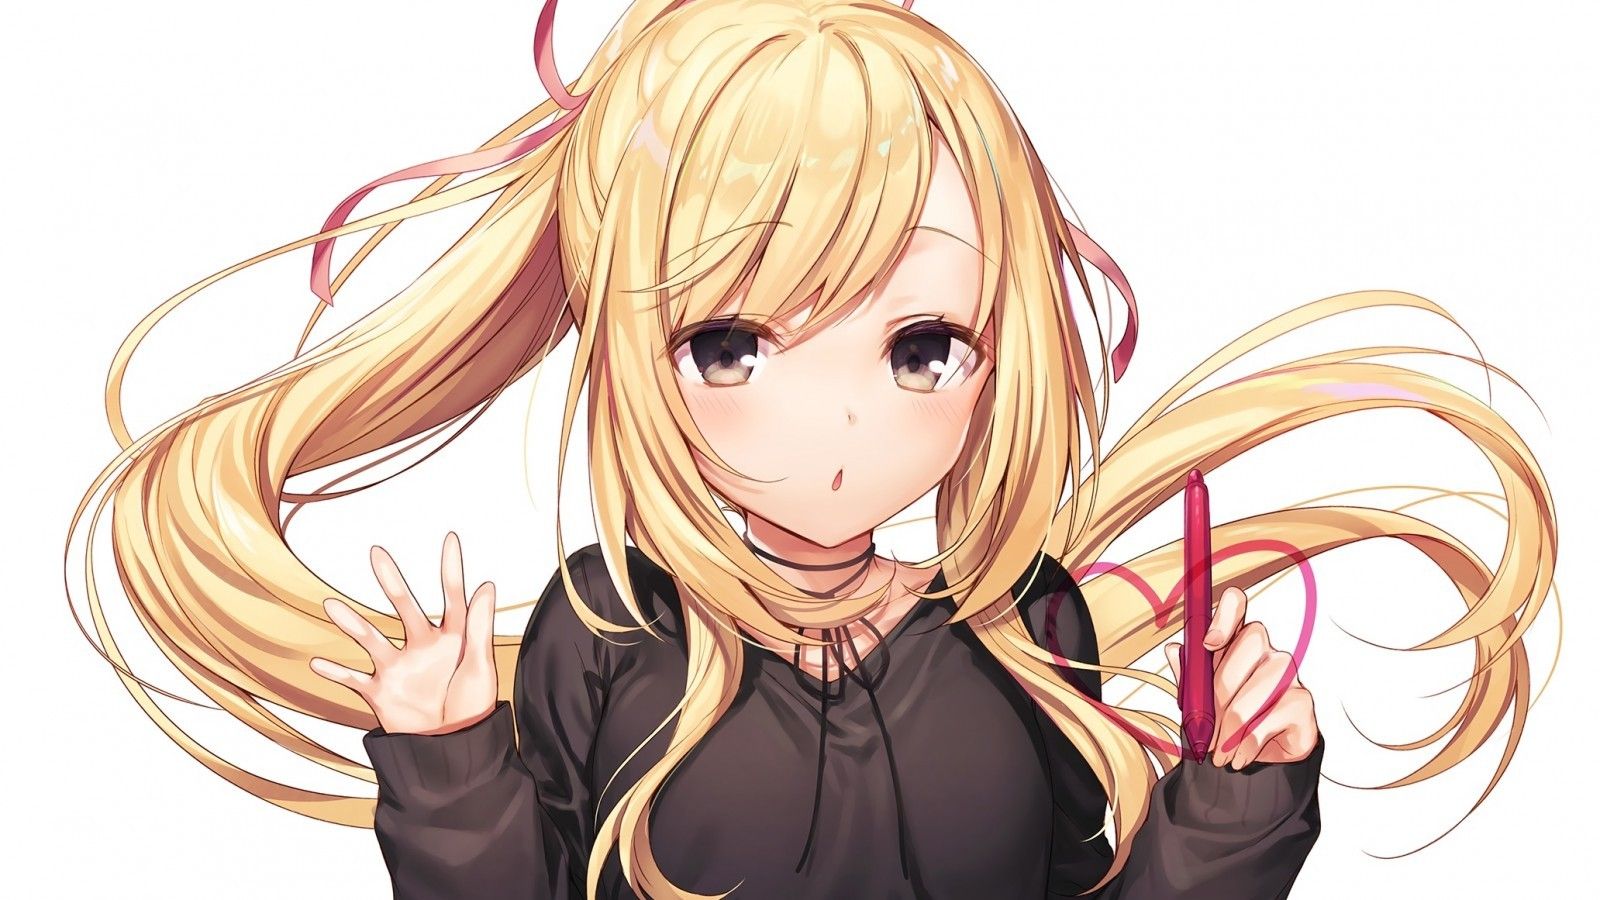 Premium Vector  Smiling anime manga girl with blonde hair wearing school  uniform